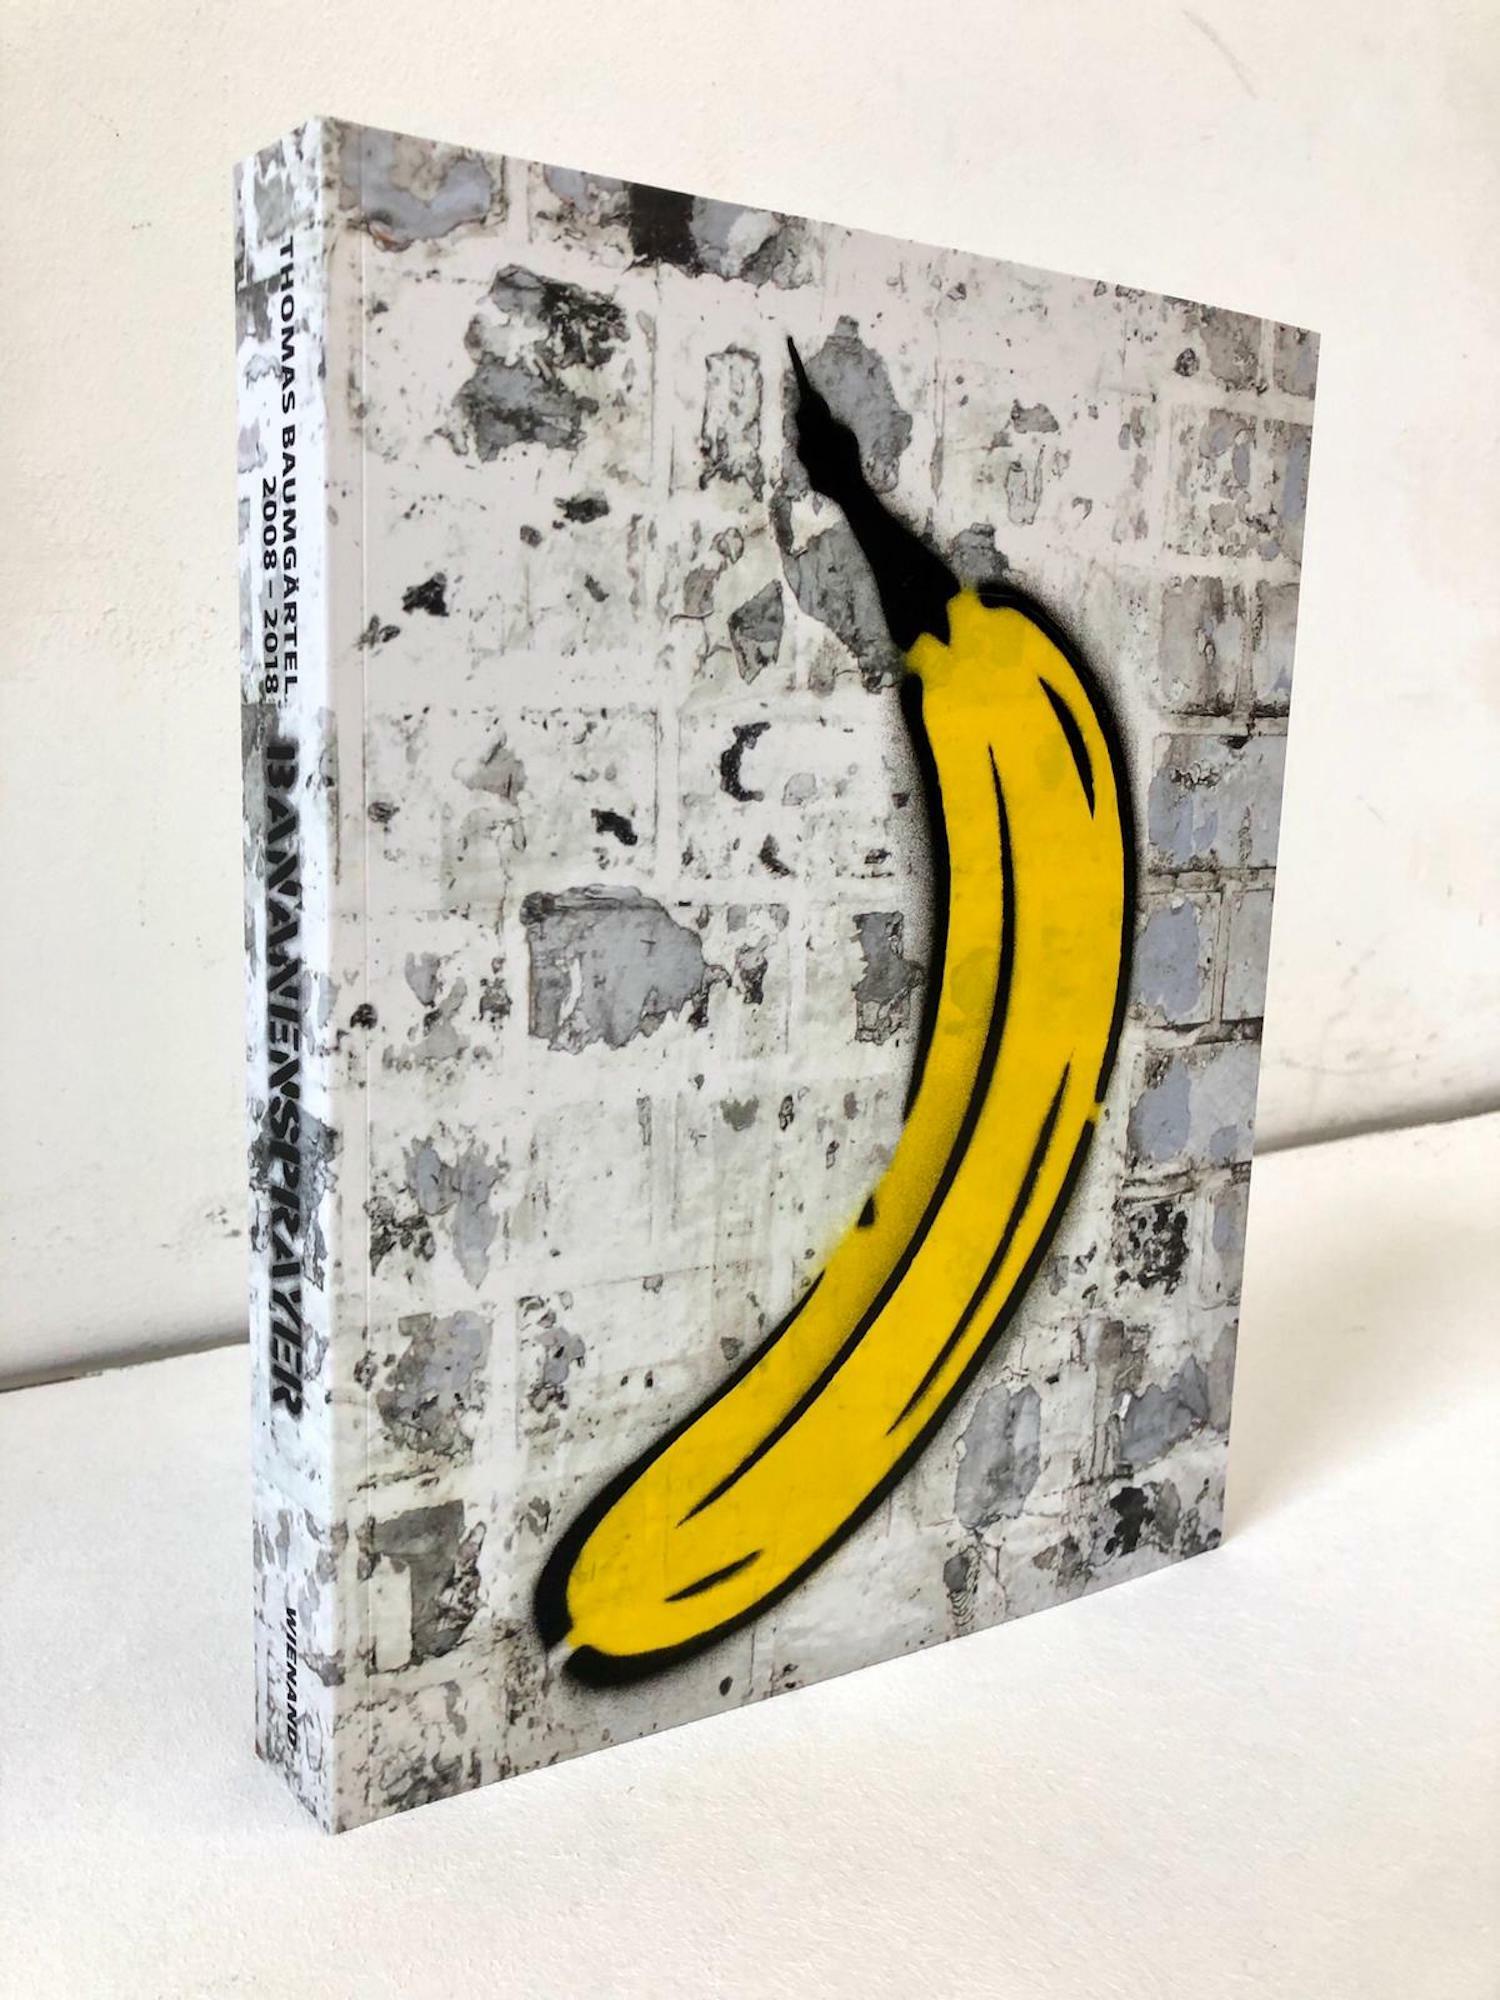 Object "Book with Hand-Sprayed Banana" (2019) by Thomas Baumgärtel